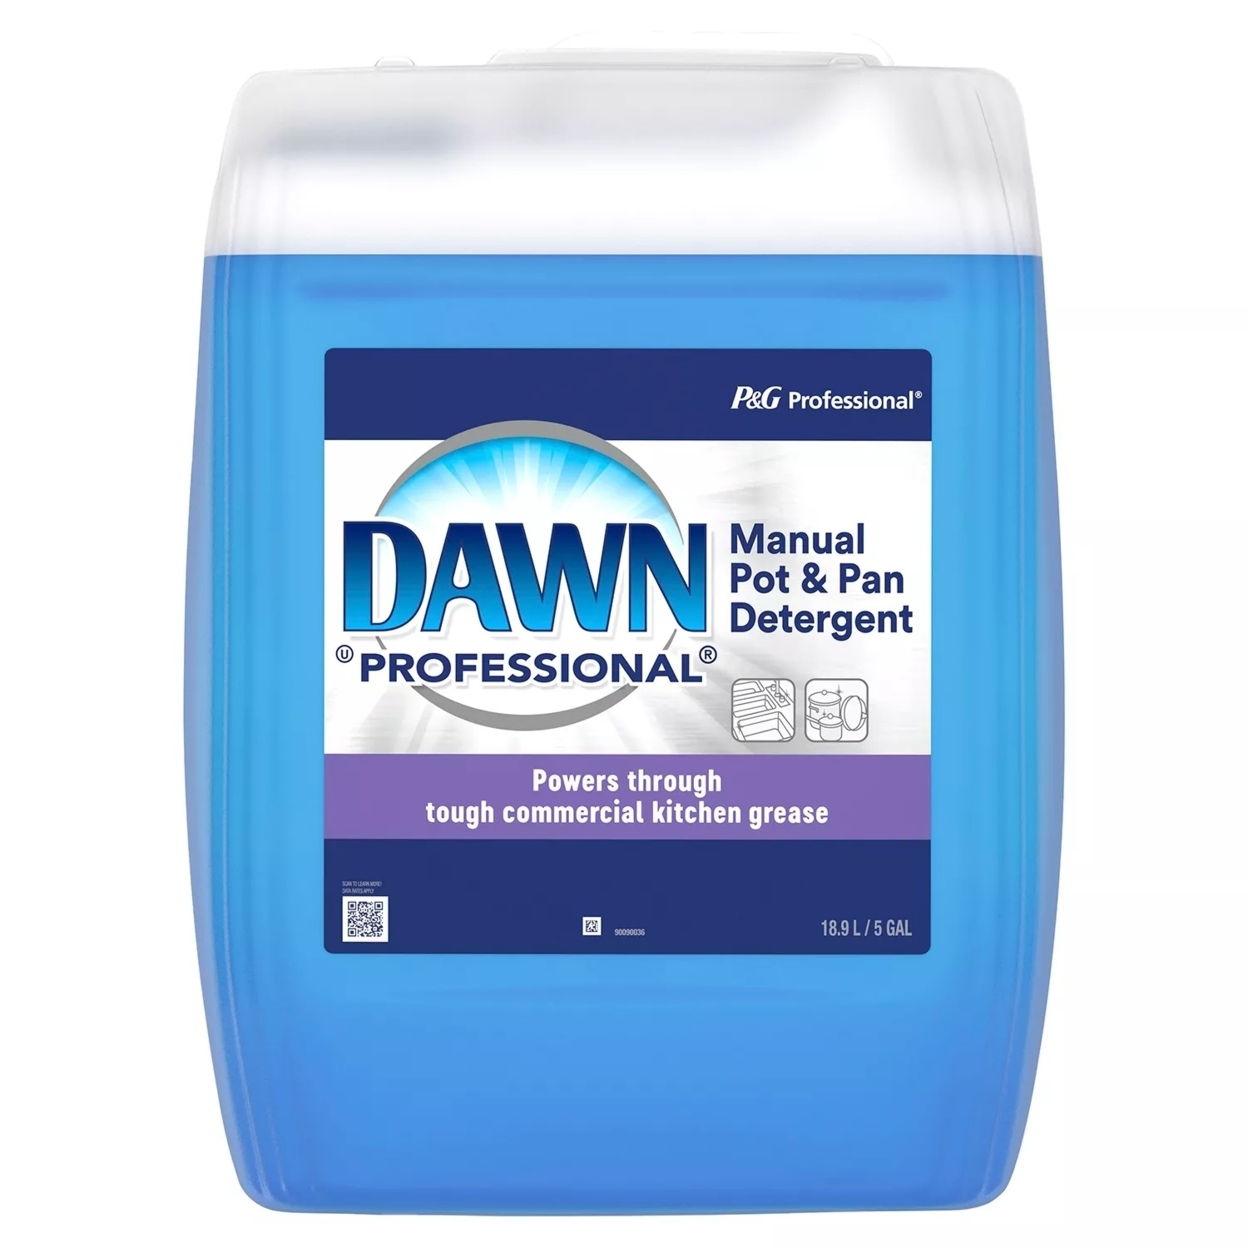 Dawn Professional Manual Pot And Pan Detergent Dish Soap (5 Gallon)